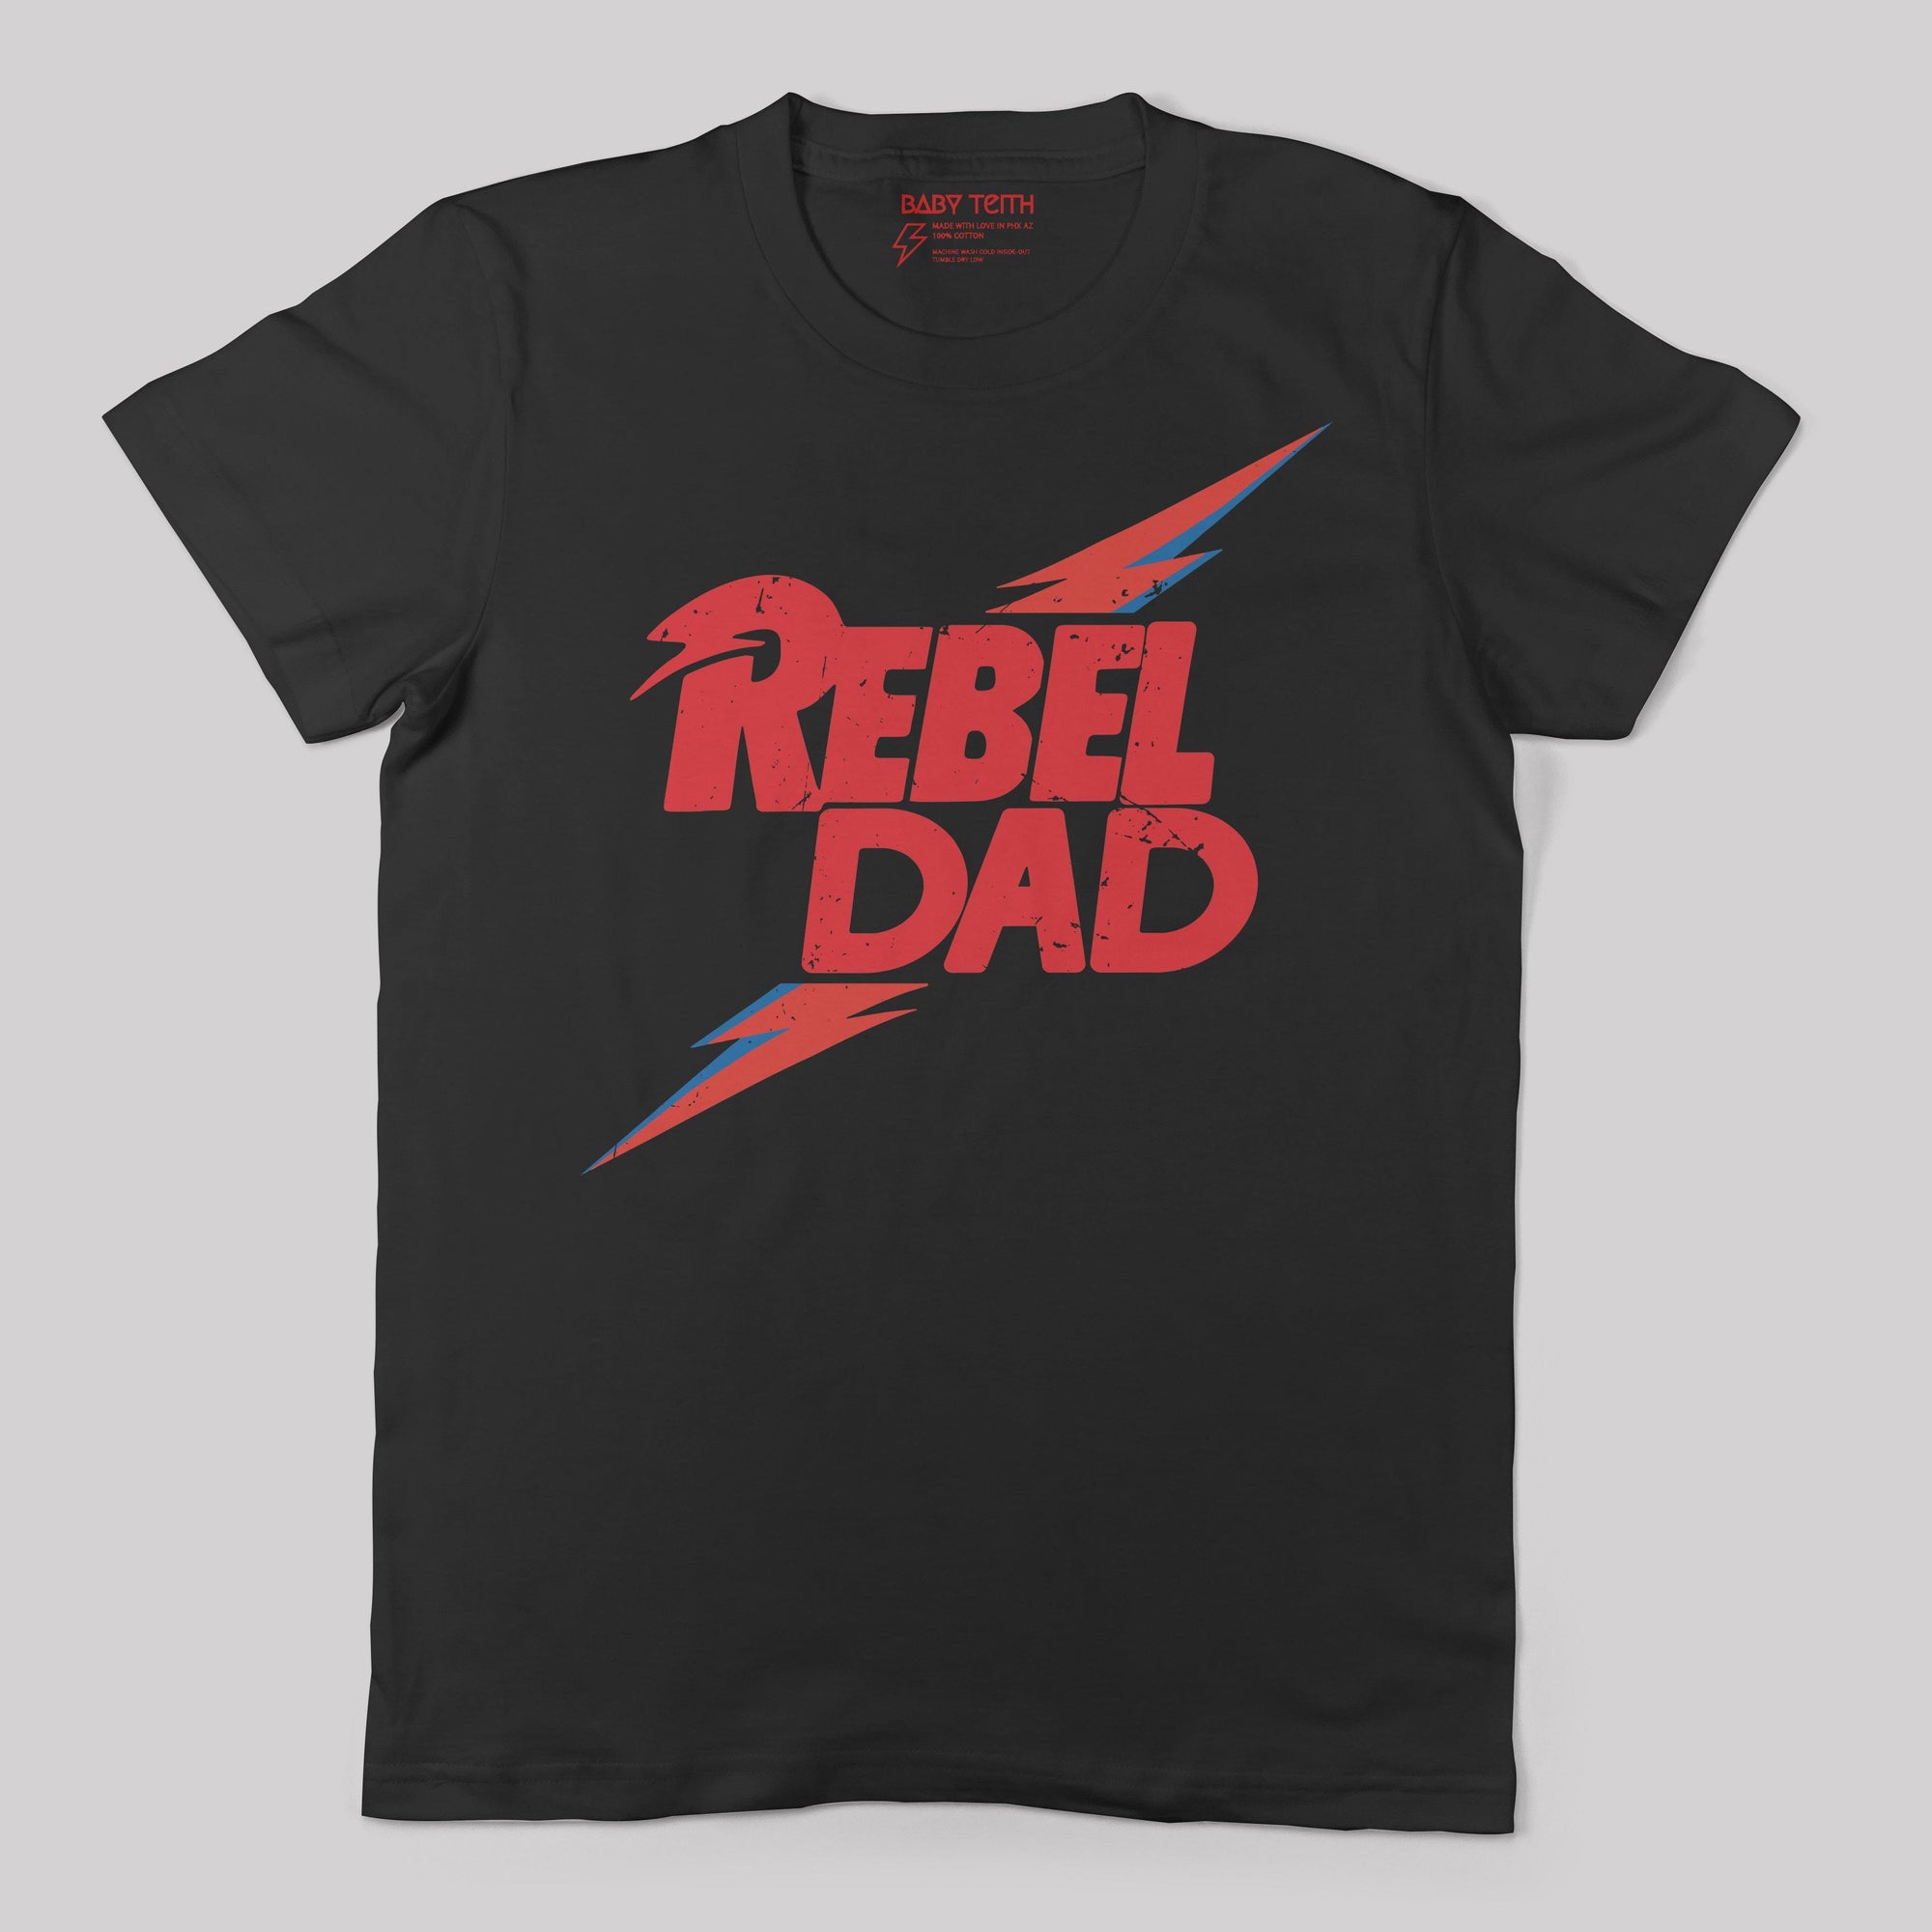 Rebel Dad Tee - Unisex Fit (2 Colors) - Baby Teith